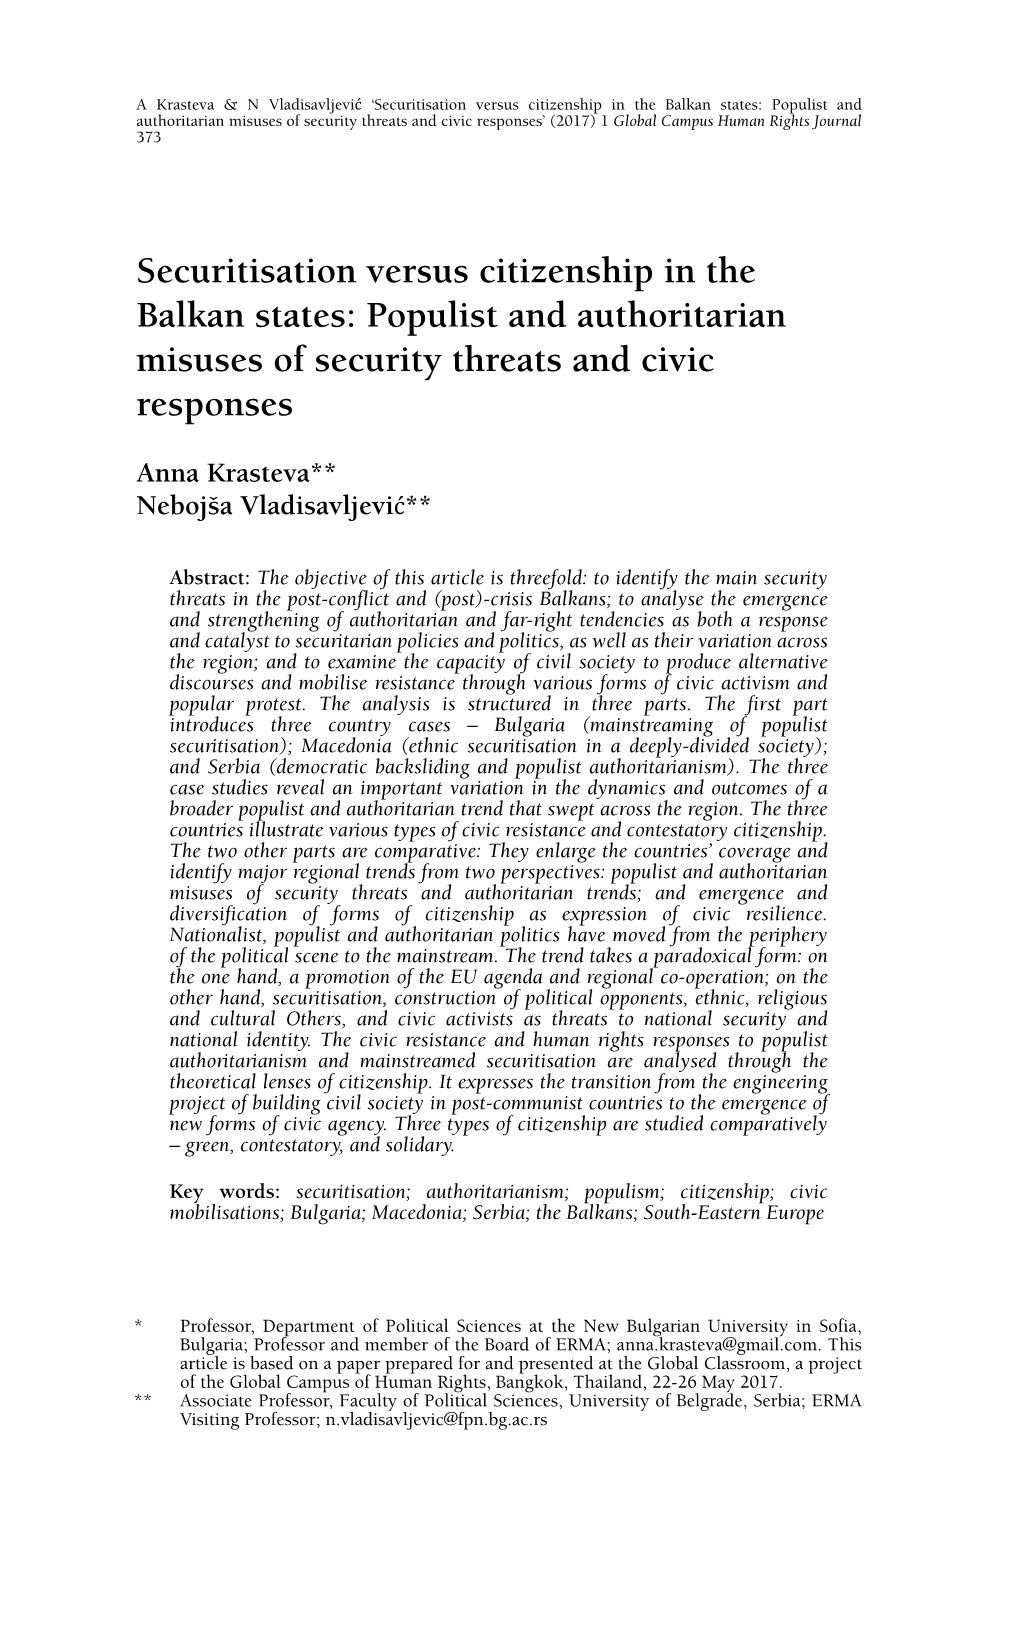 Securitisation Versus Citizenship in the Balkan States